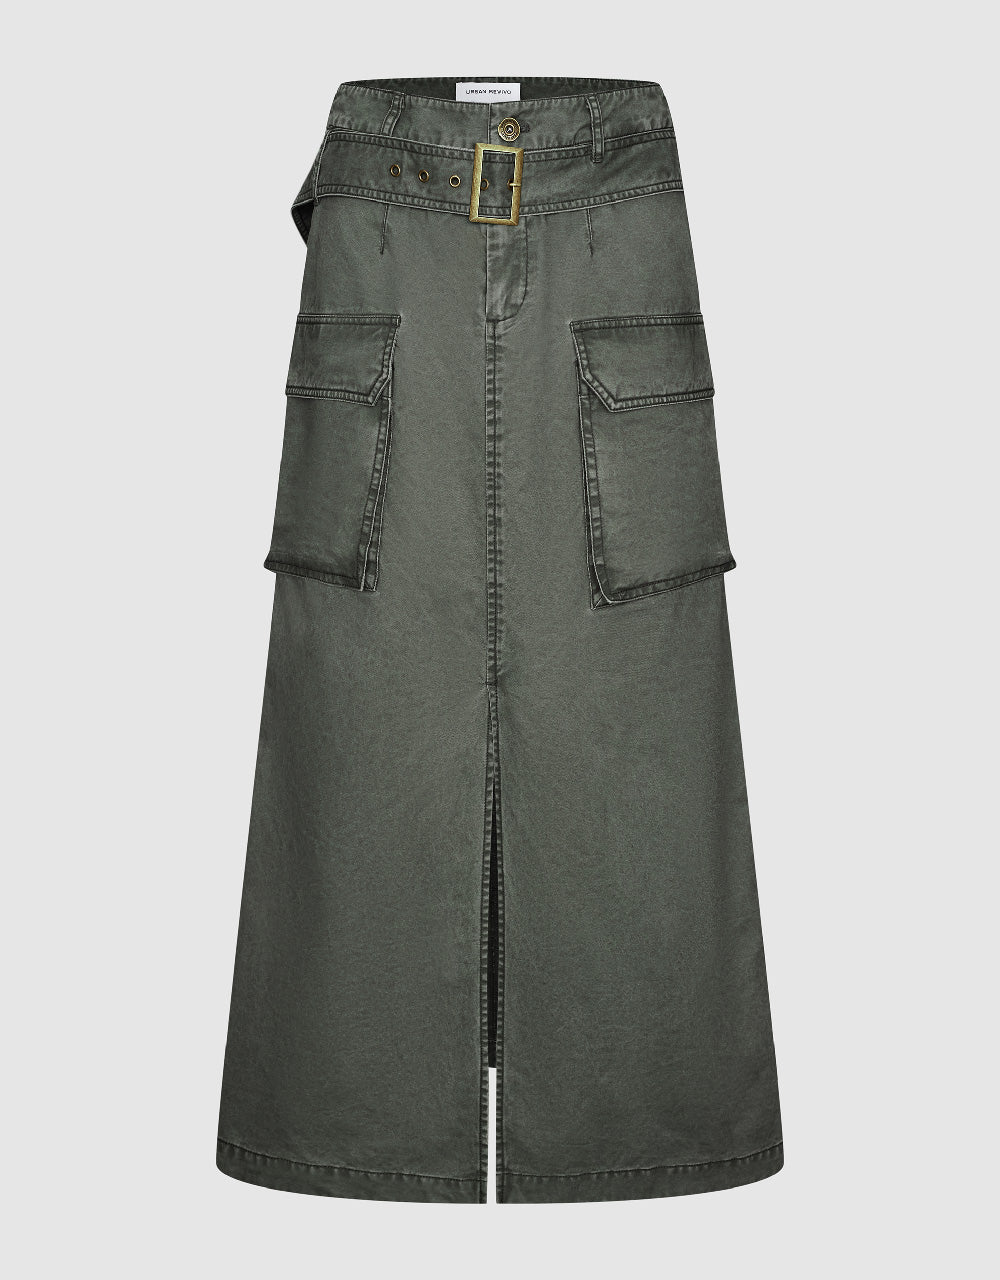 Utilities A-Line Skirt With Belt